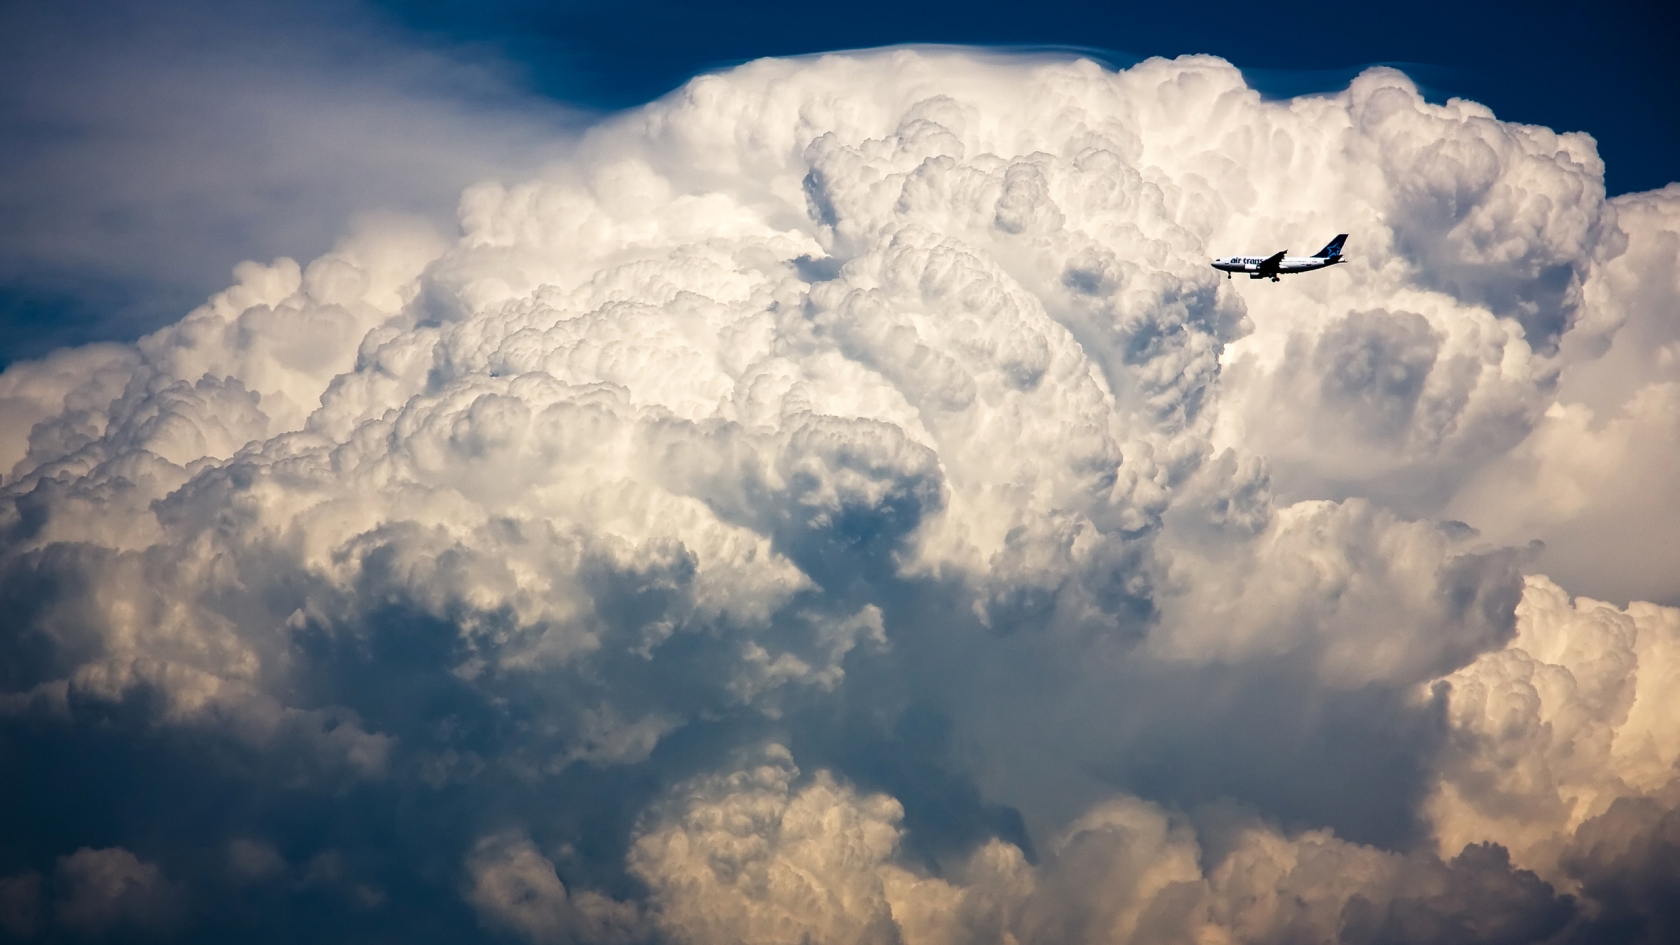 Air Transat vs Storm Cloud for 1680 x 945 HDTV resolution